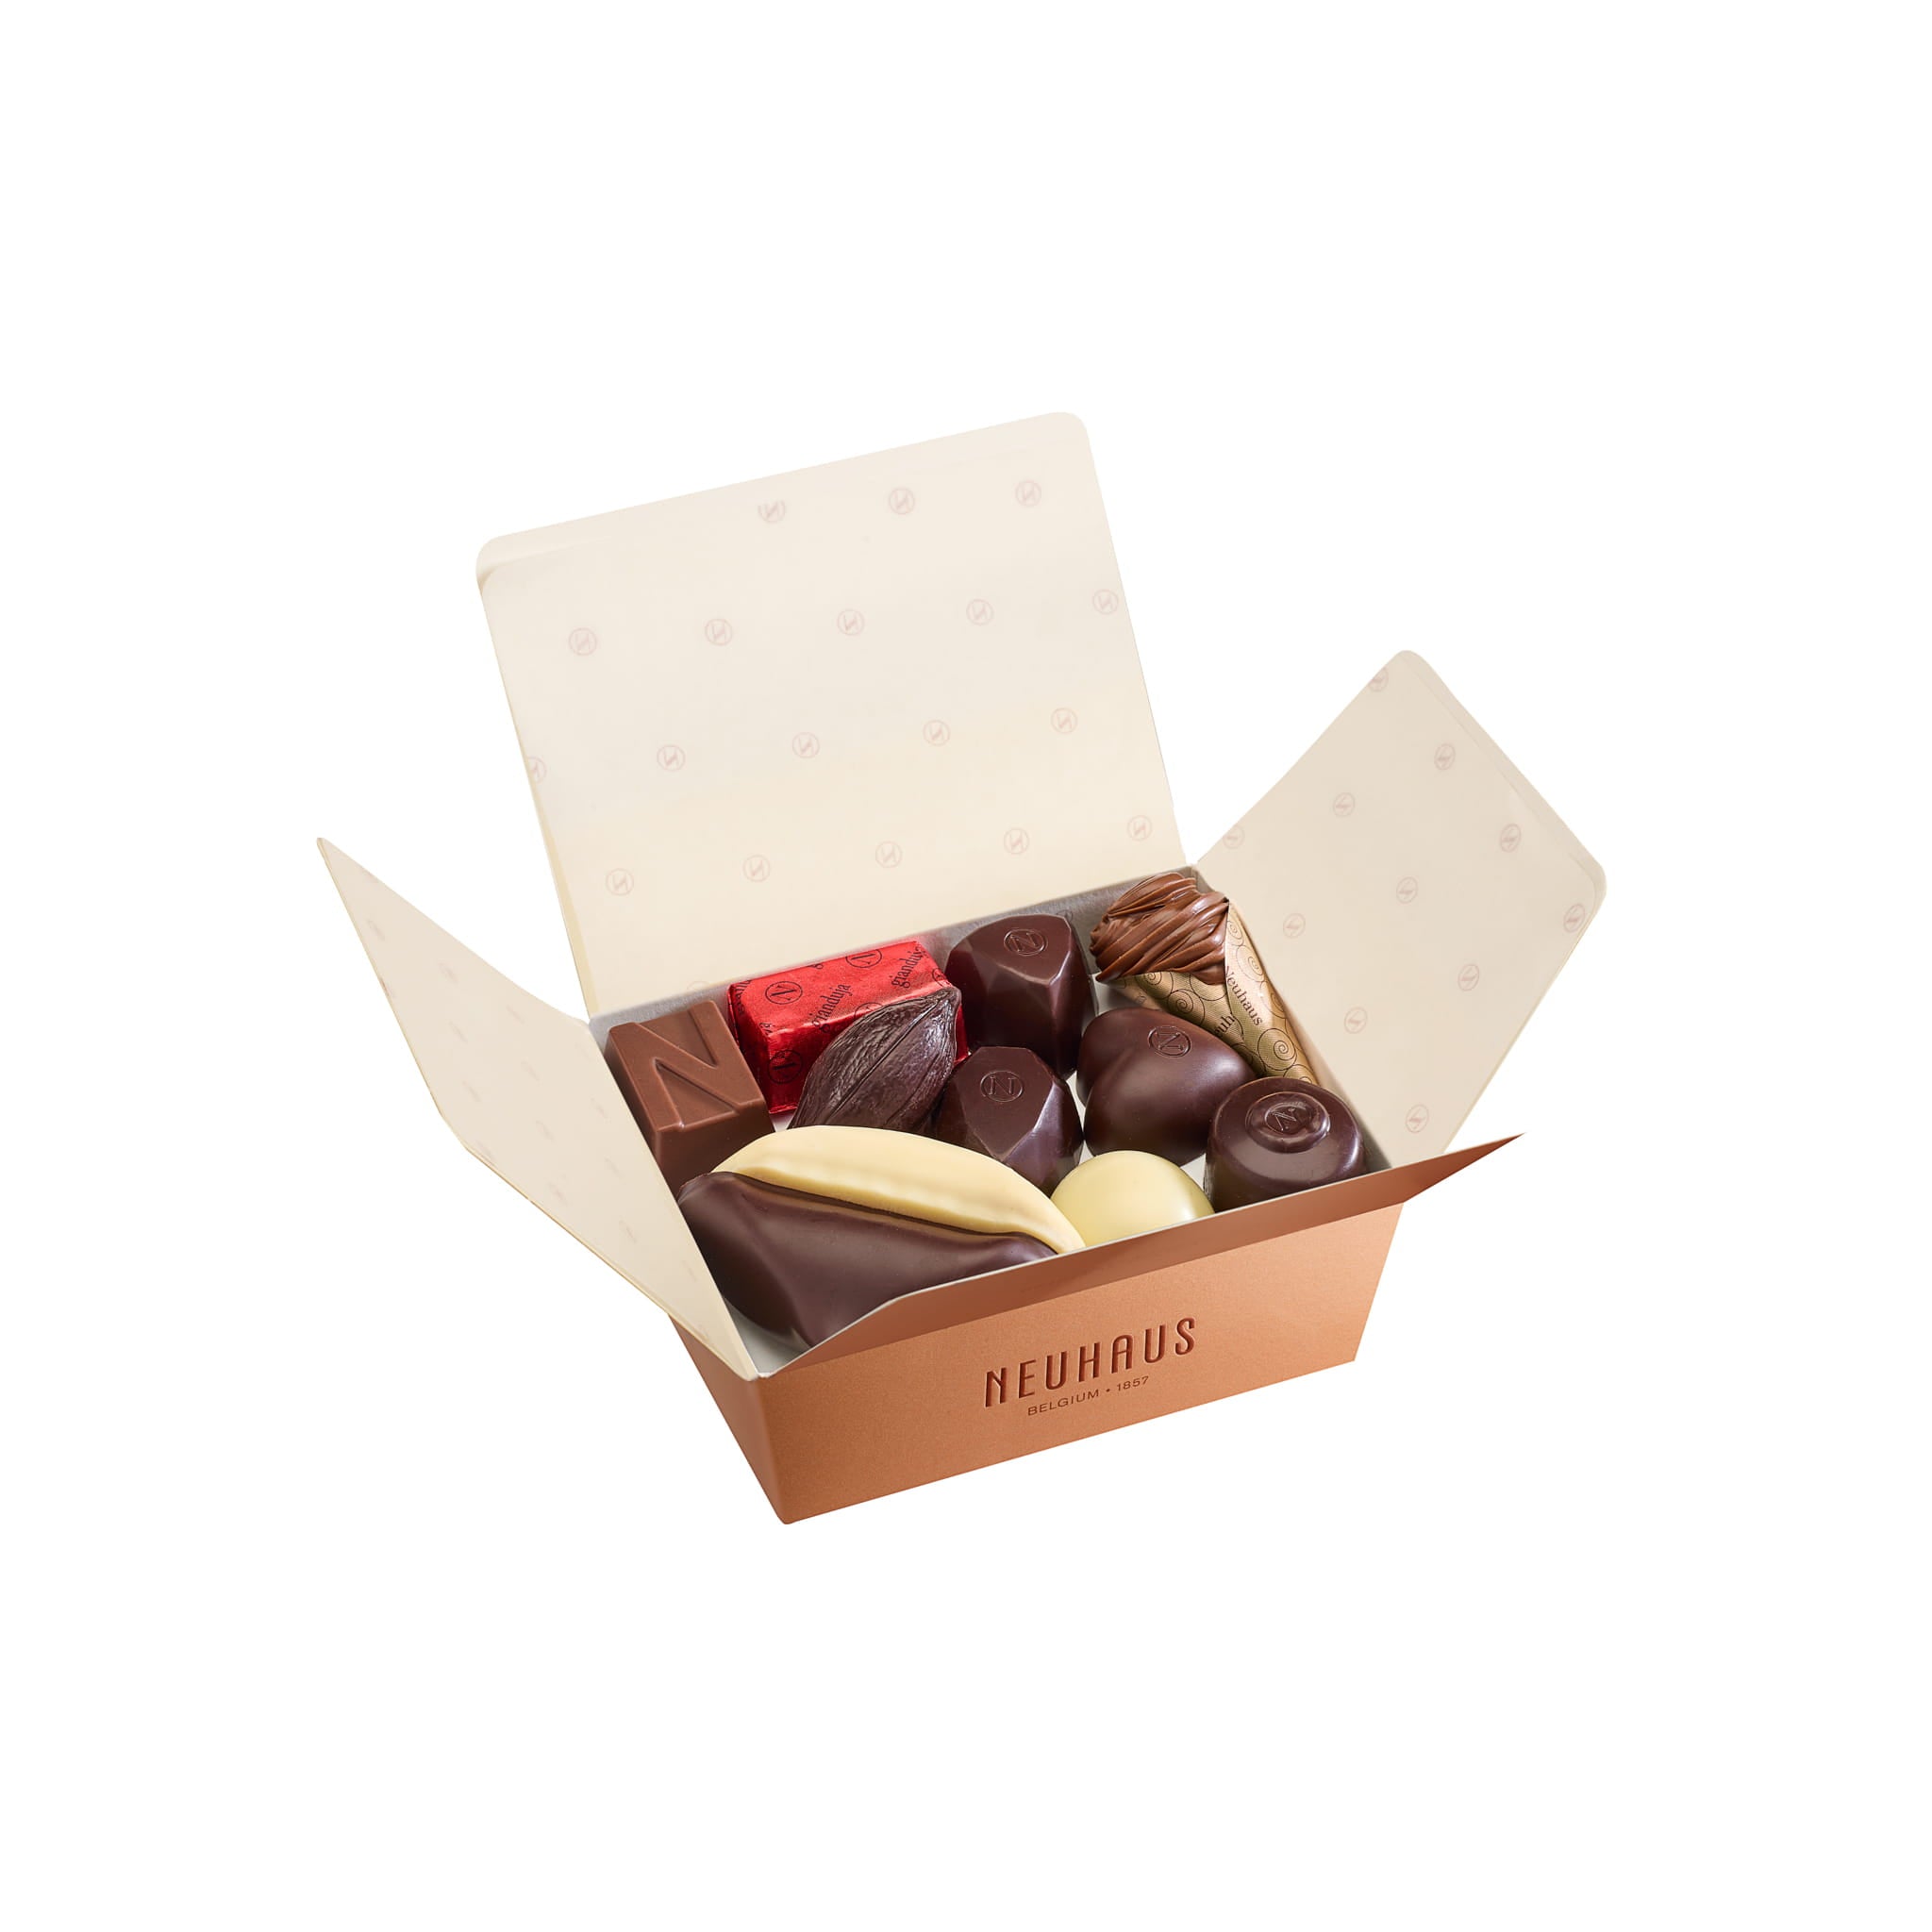 Neuhaus Belgian Chocolate Classic Ballotin - Praliné Ganache & Gianduja 250g box open